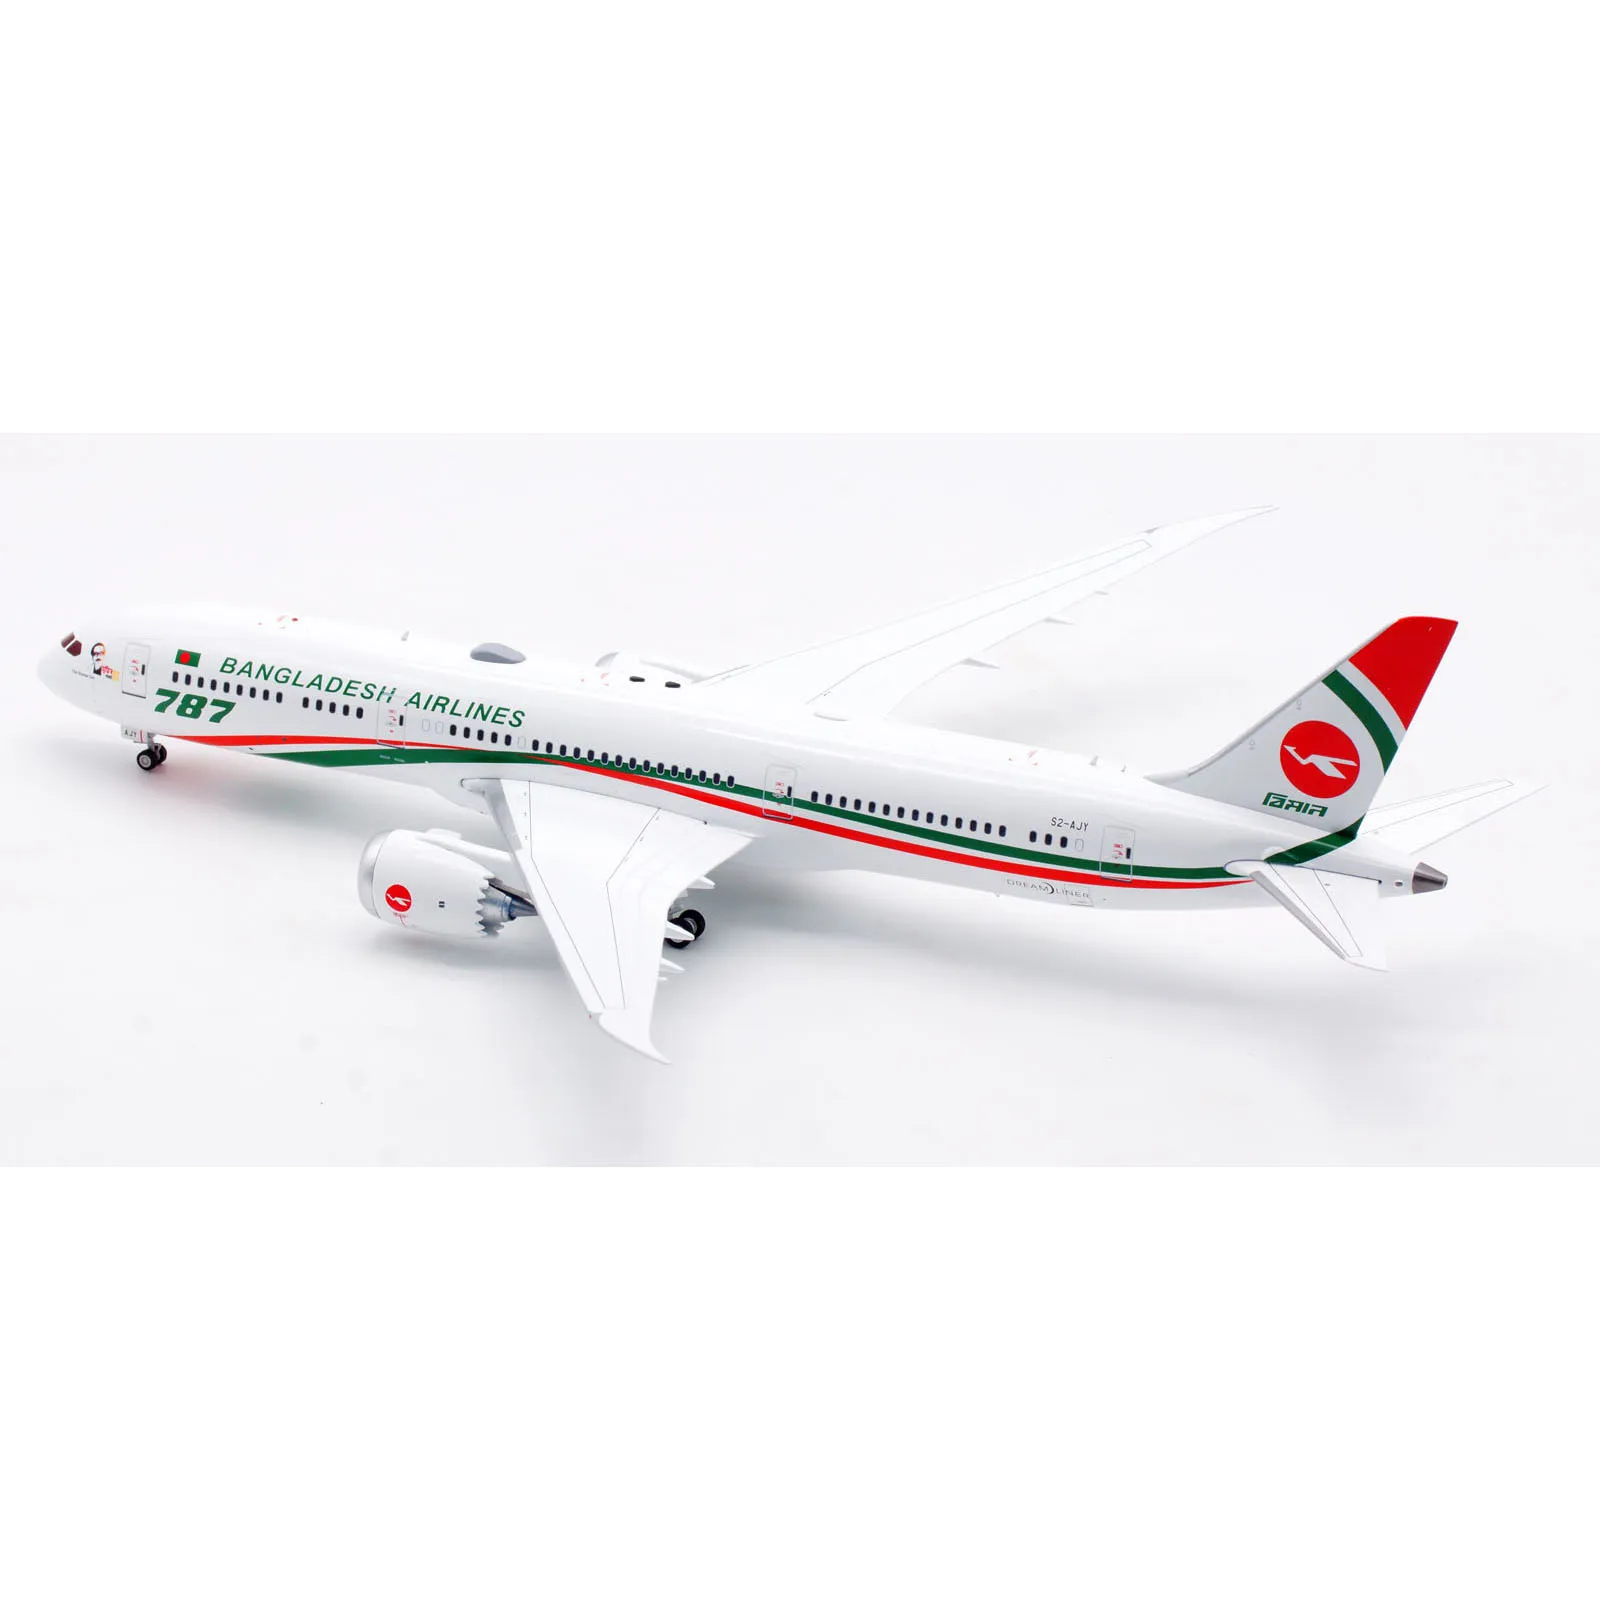 If789ey1123 Gelegeerd Verzamelvliegtuig Cadeau Aan Boord 1:200 Biman Bangladesh Airlines Boeing B787-9 Diecast Vliegtuig Model S2-AJY